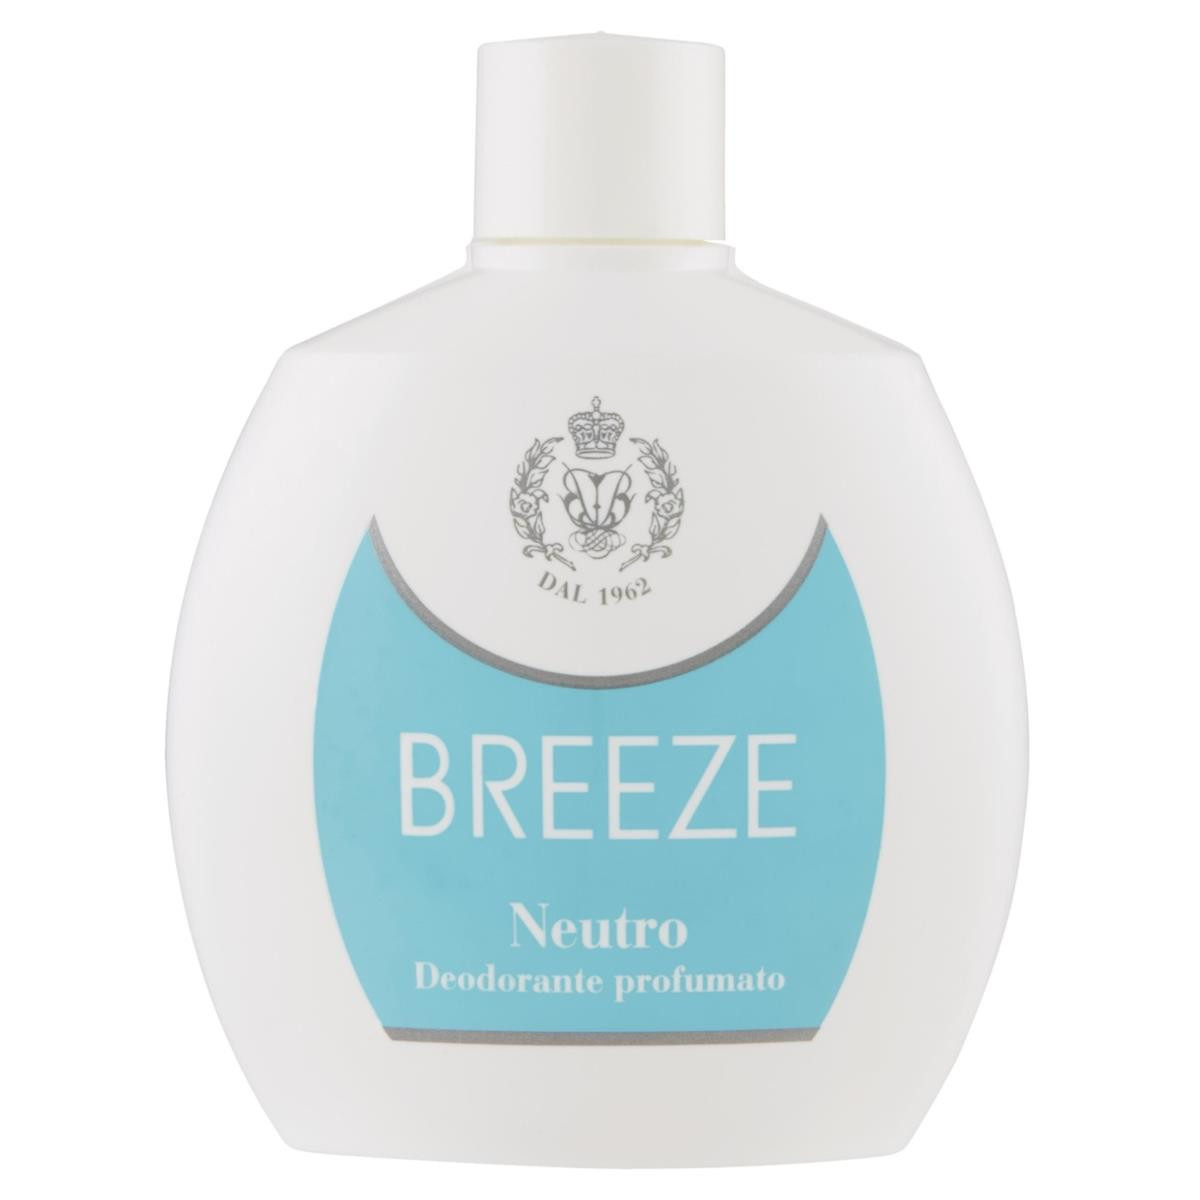 Breeze Neutro Deodorante profumato 100 ml